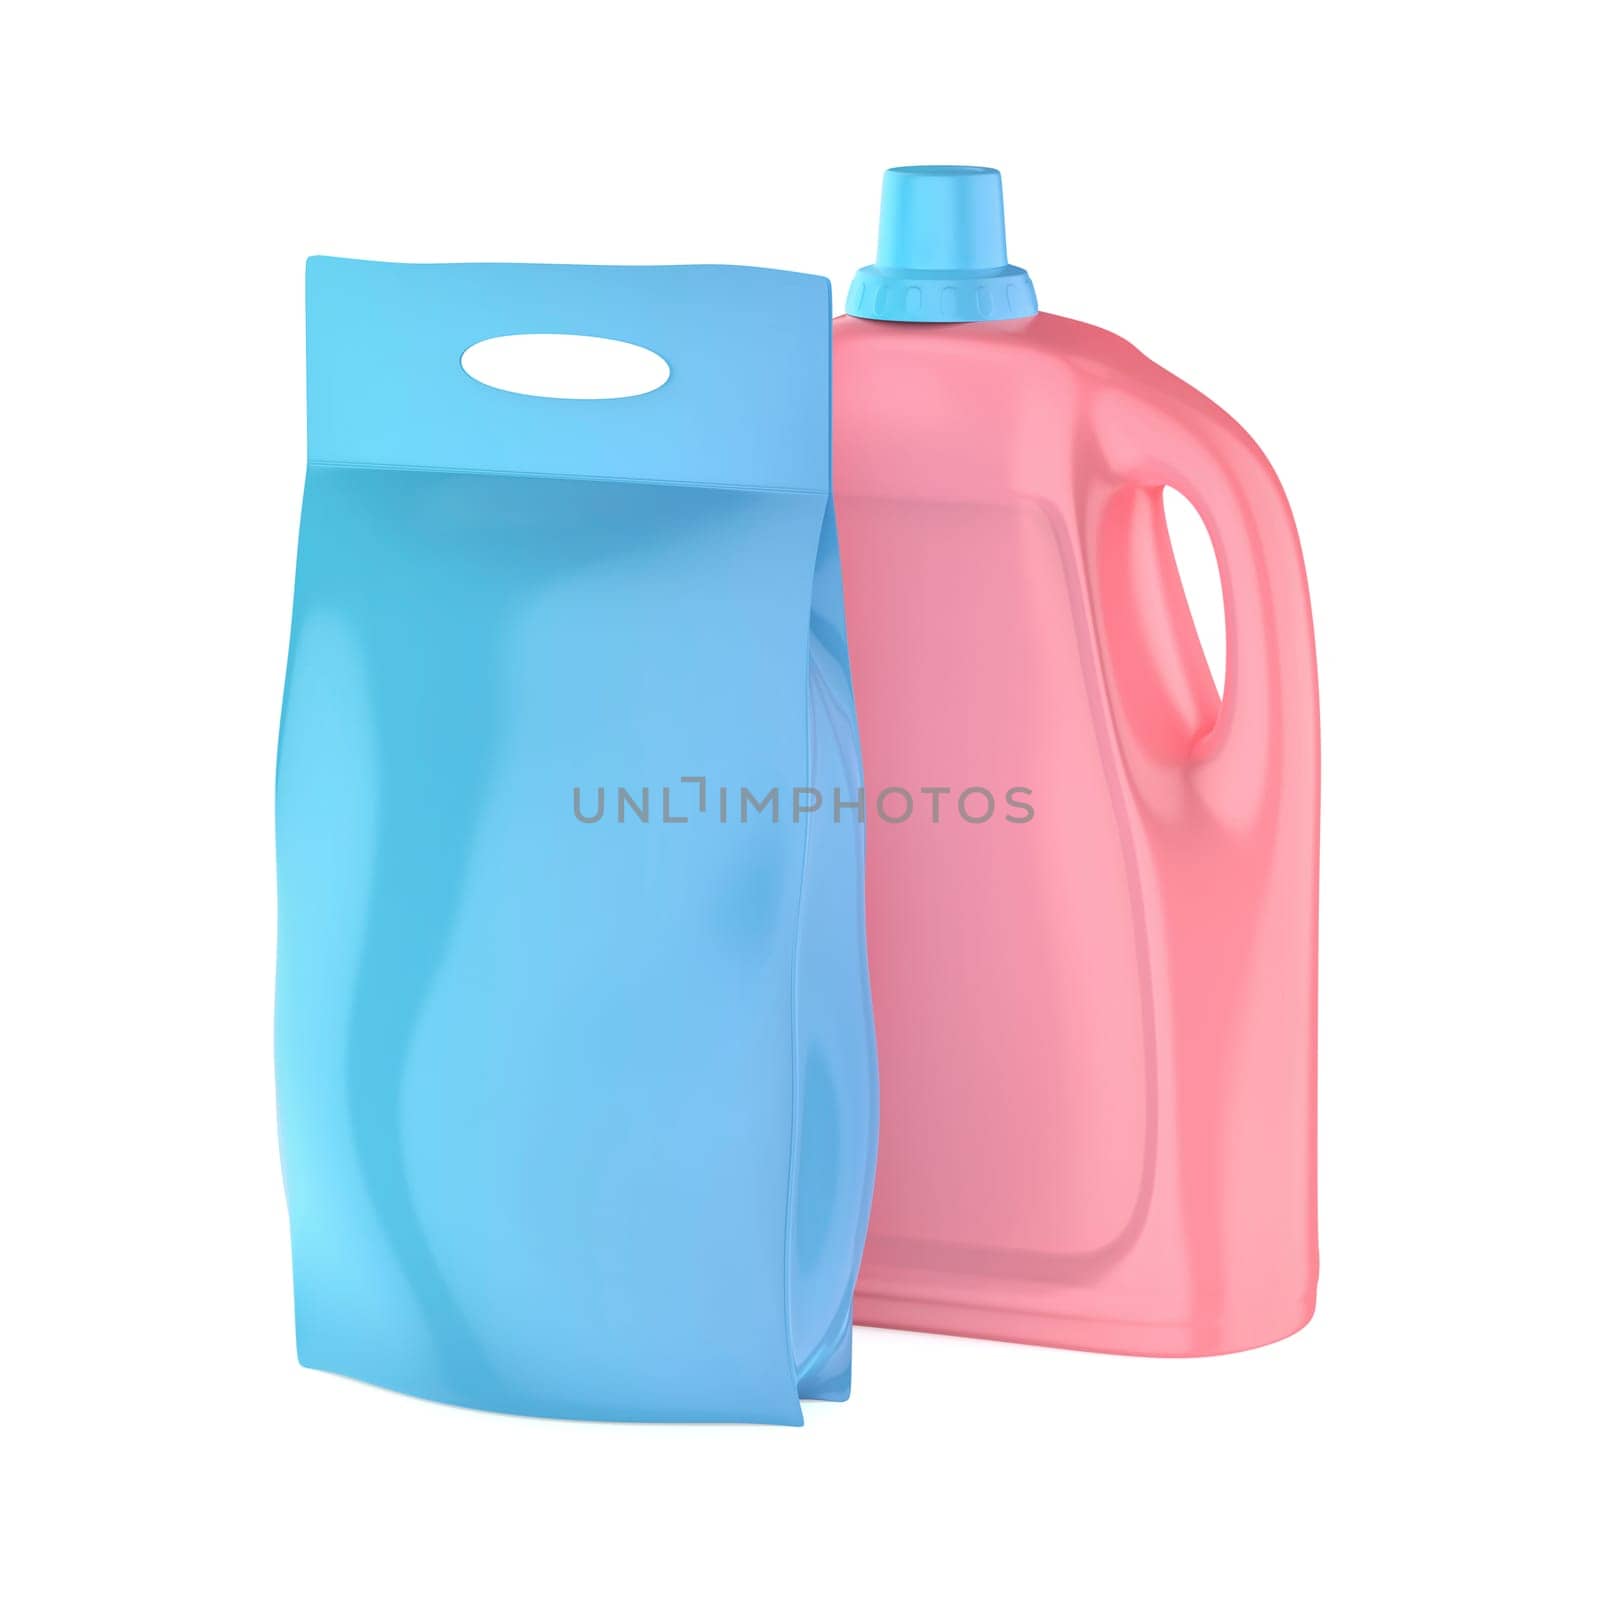 Pink liquid detergent bottle and blue washing powder bag on white background